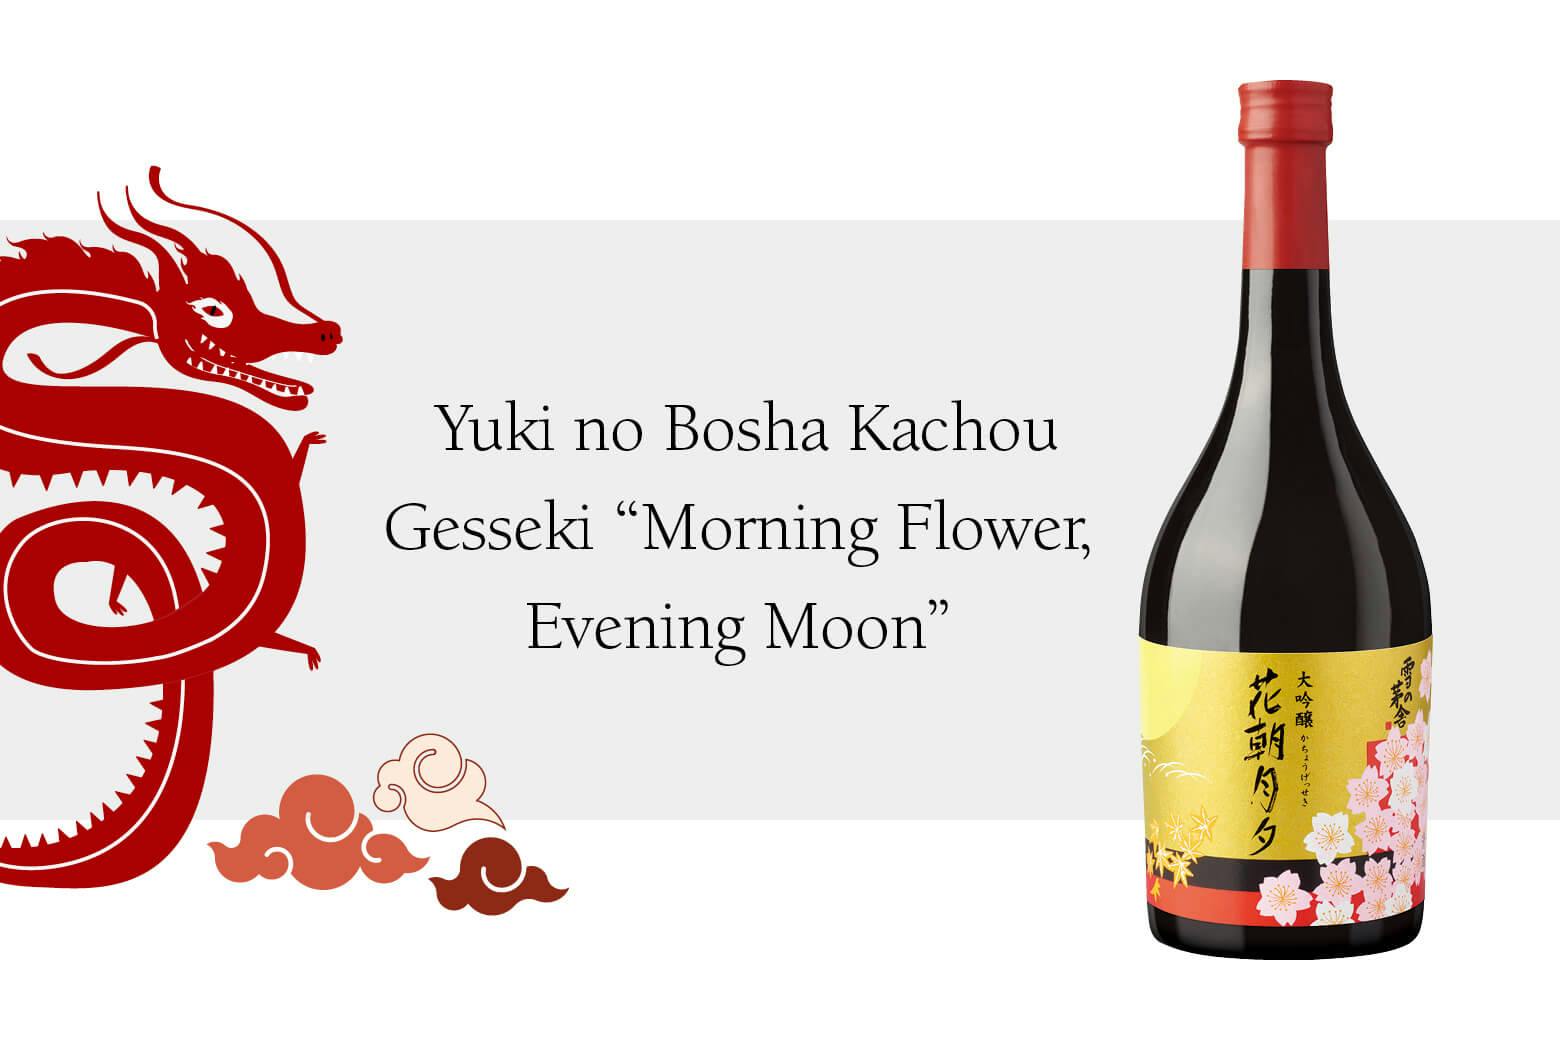 Yuki no Bosha Kachou Gesseki “Morning Flower Evening Moon” with Chinese zodiac Dragon